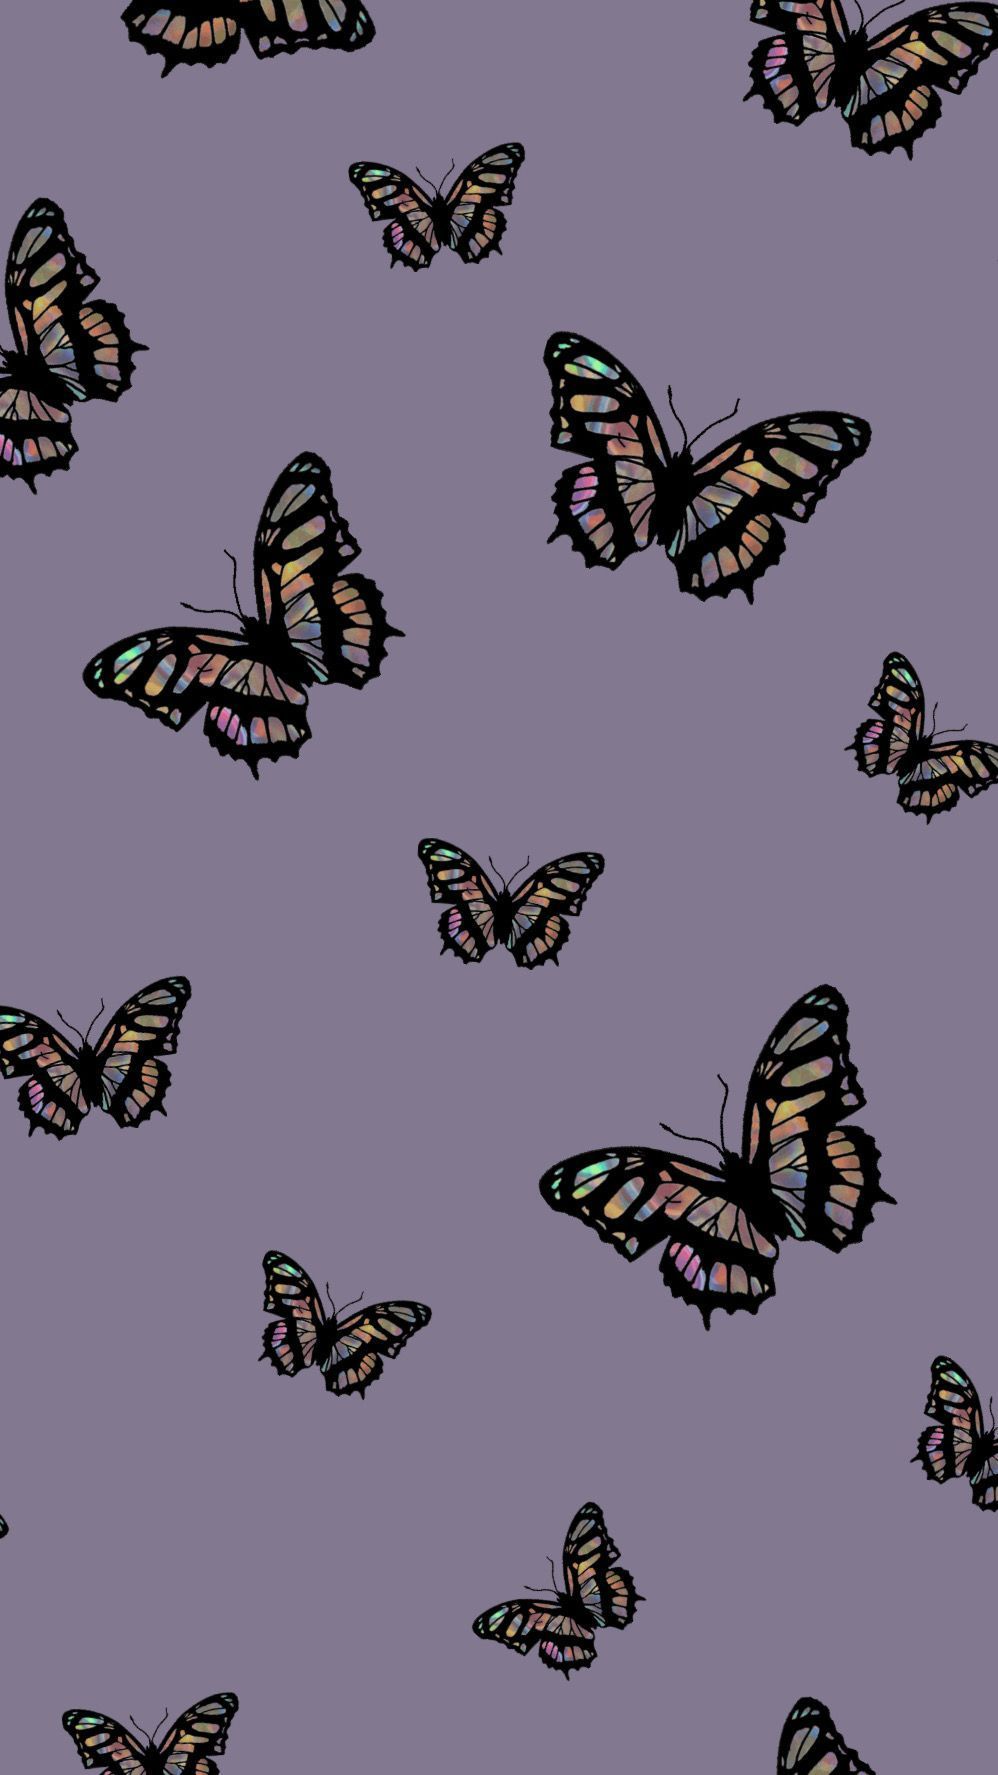 Butterfly iPhone Wallpaper Aesthetic. ipcwallpaper in 2020